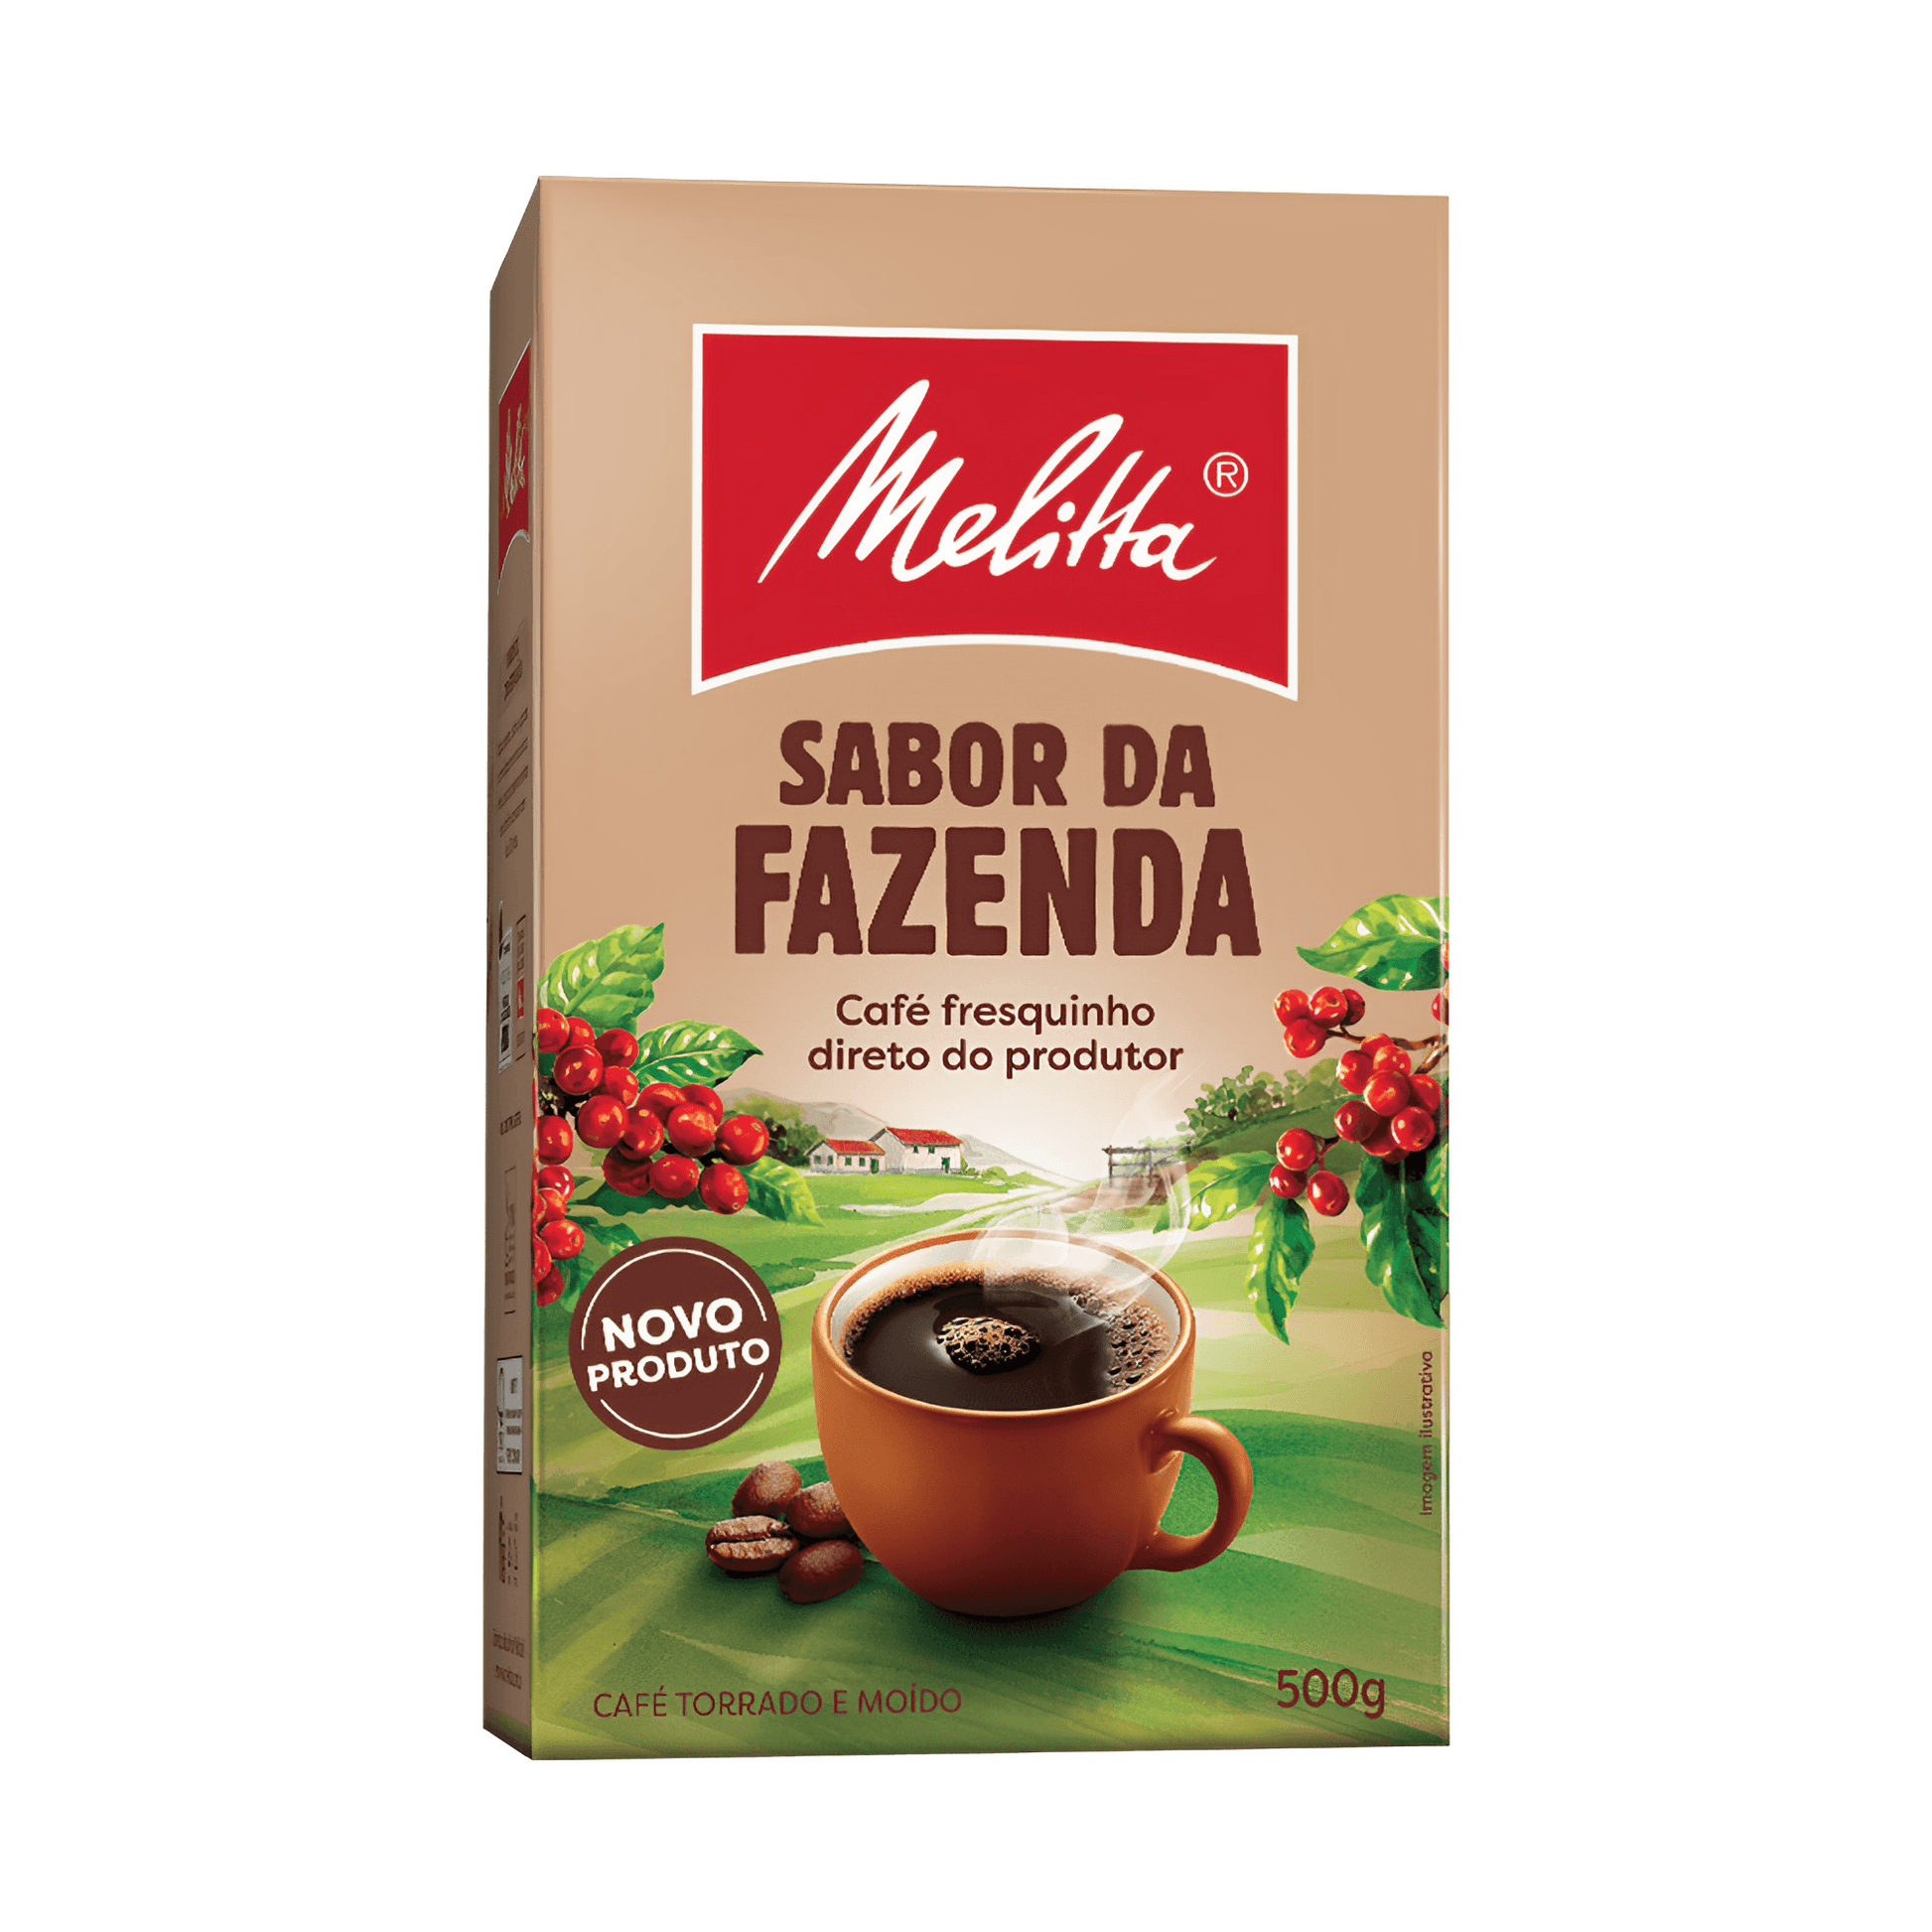 Melitta Farm Flavor Coffee Vacuum-Packed 17.64 oz. (Pack of 2) - Brazilian Shop